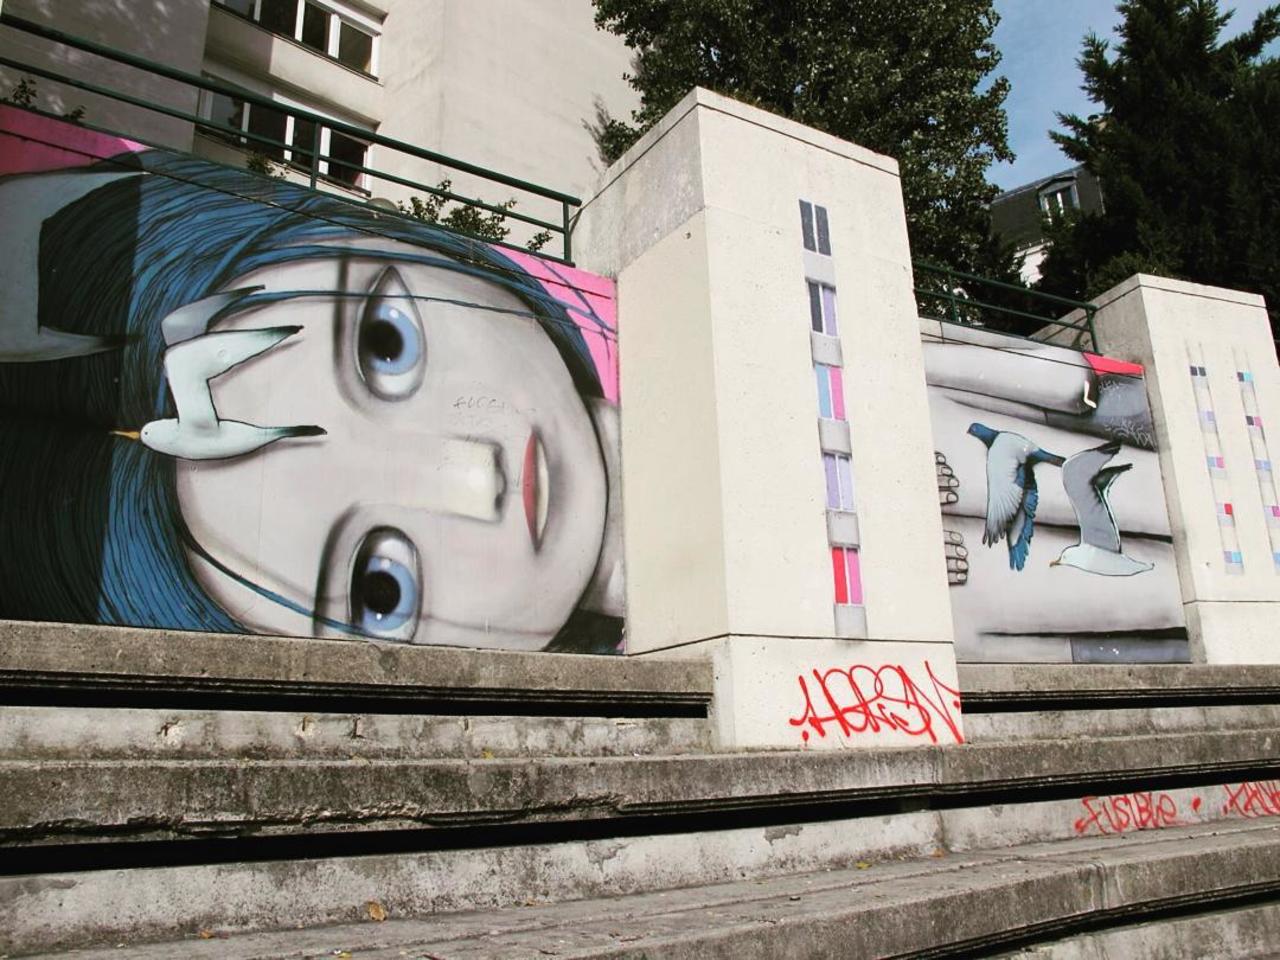 #Paris #graffiti photo by @streetrorart http://ift.tt/1NvTnNY #StreetArt https://t.co/QnOsASOABL